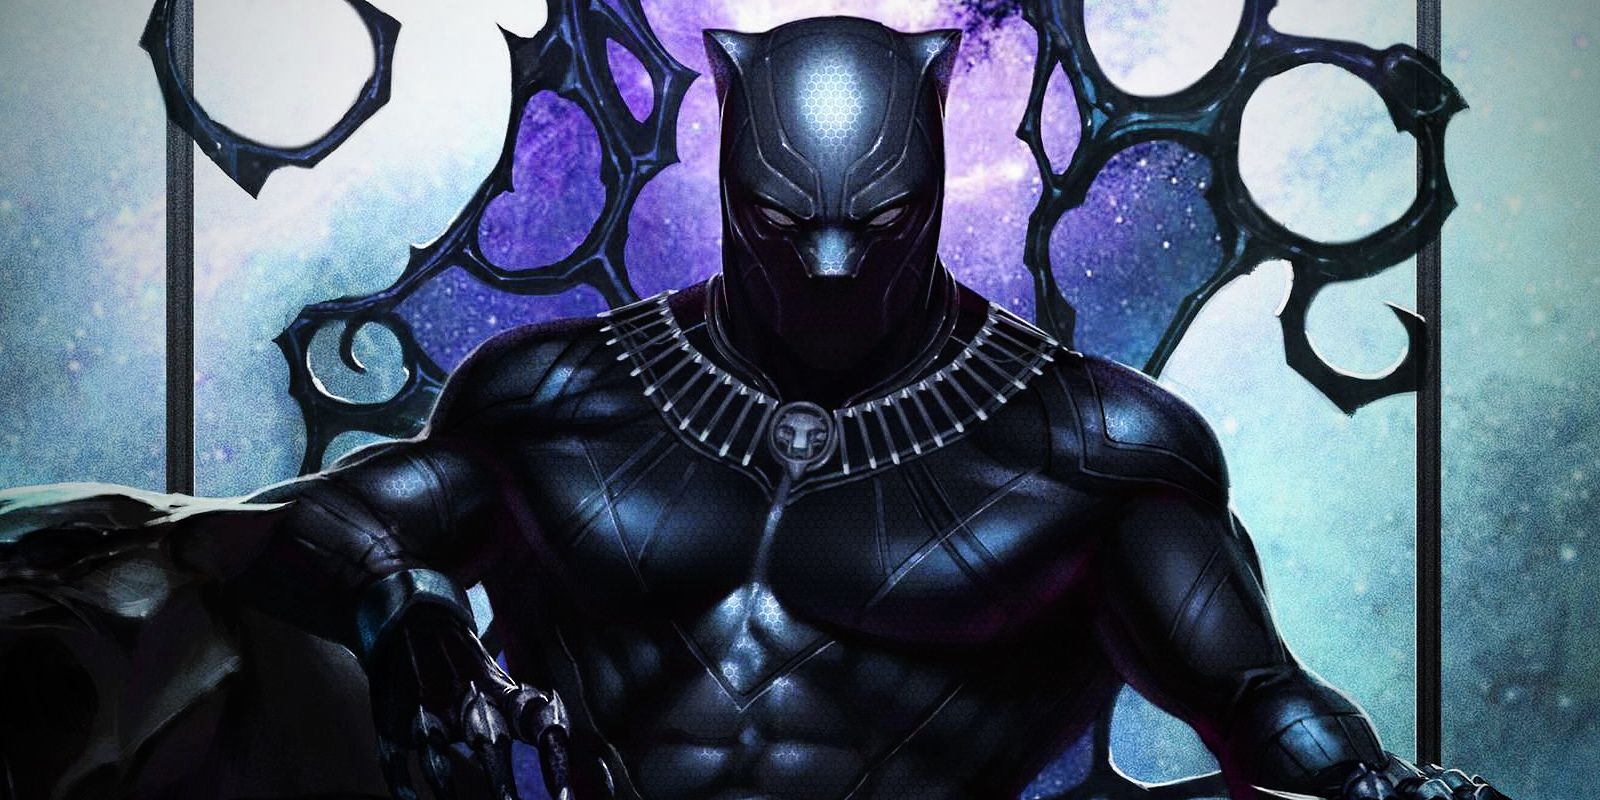 Black Panther Comic Art on Throne